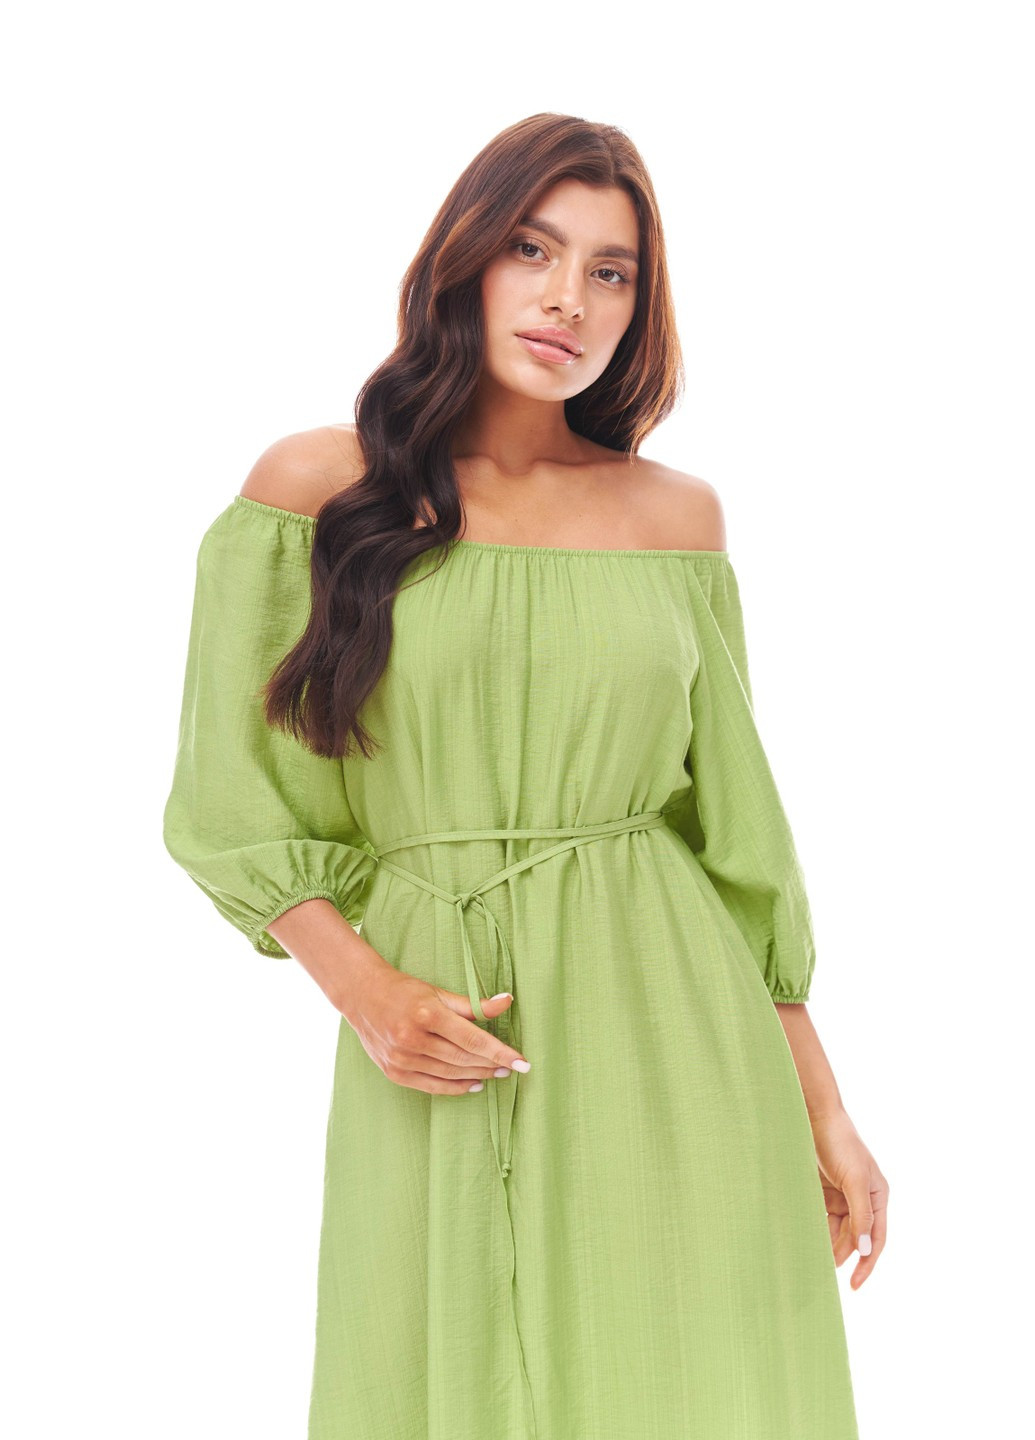 Зелена сукня довжини міді. колір – яблуко Oona